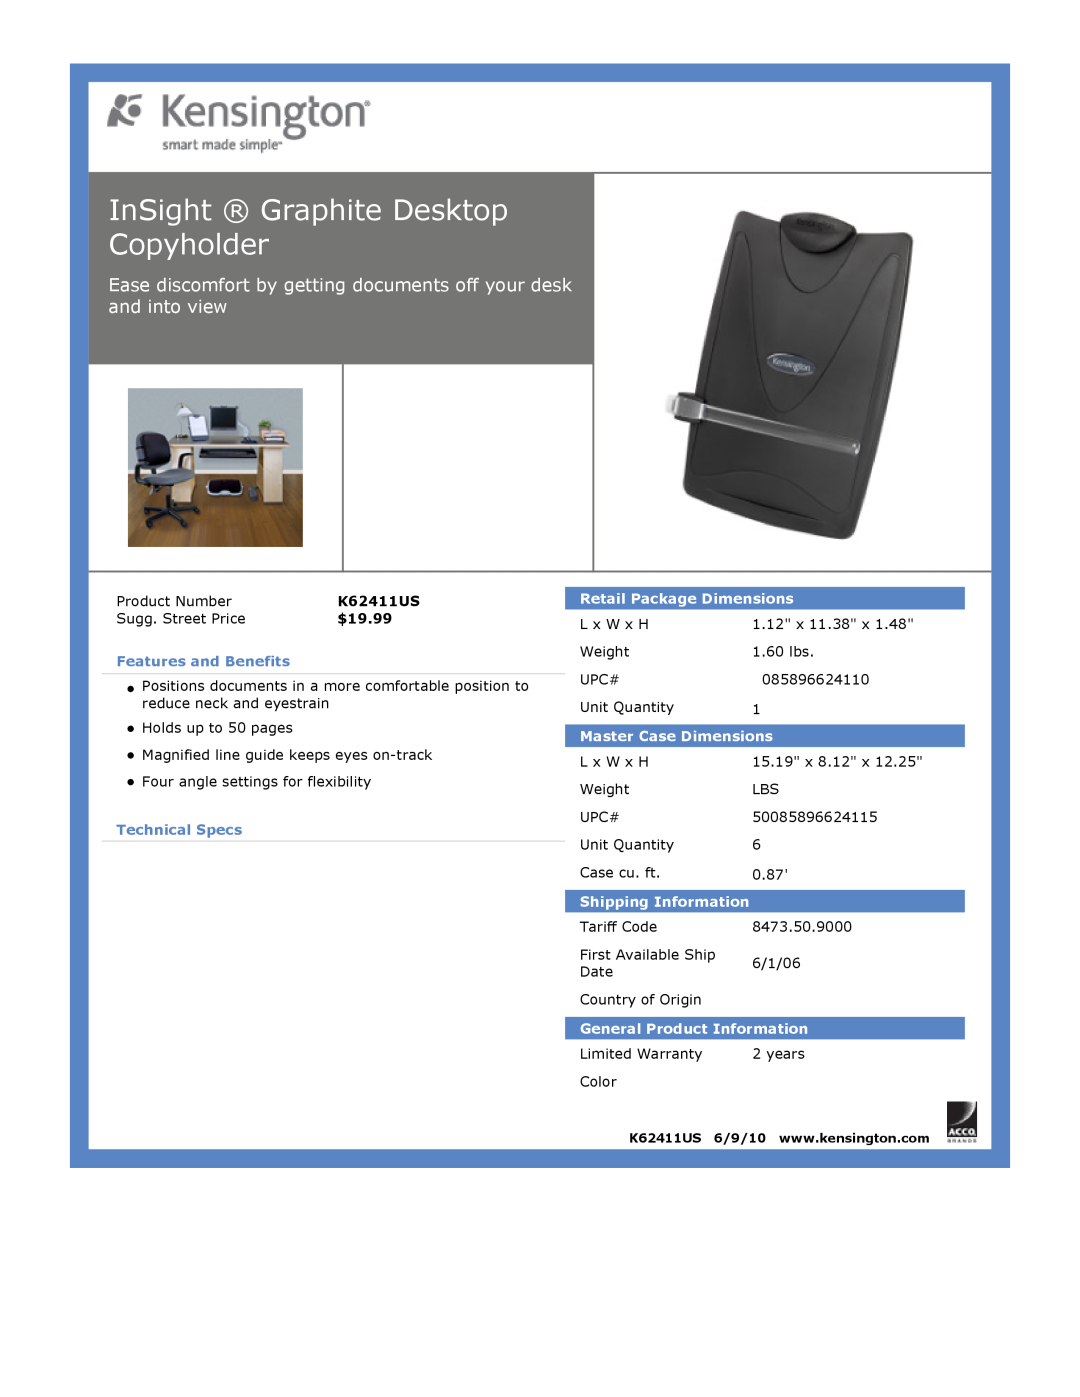 Kensington EU64325 dimensions InSight Graphite Desktop Copyholder, $19.99, Features and Benefits, Technical Specs 